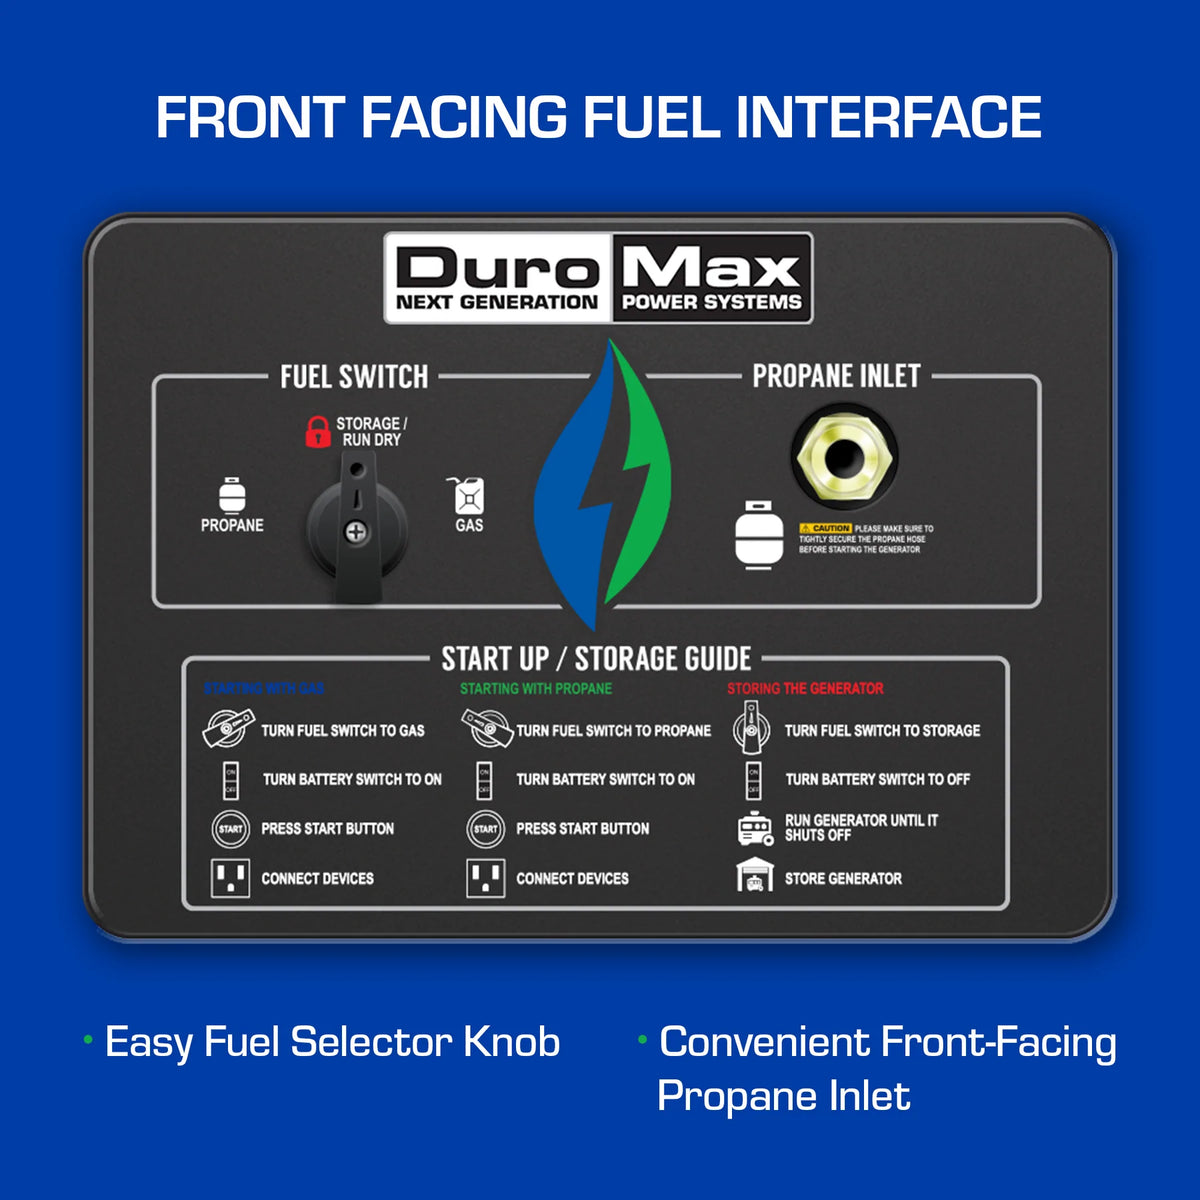 DuroMax XP13000EH 13,000-Watt/10,500-Watt 500cc Portable Gas Propane Generator